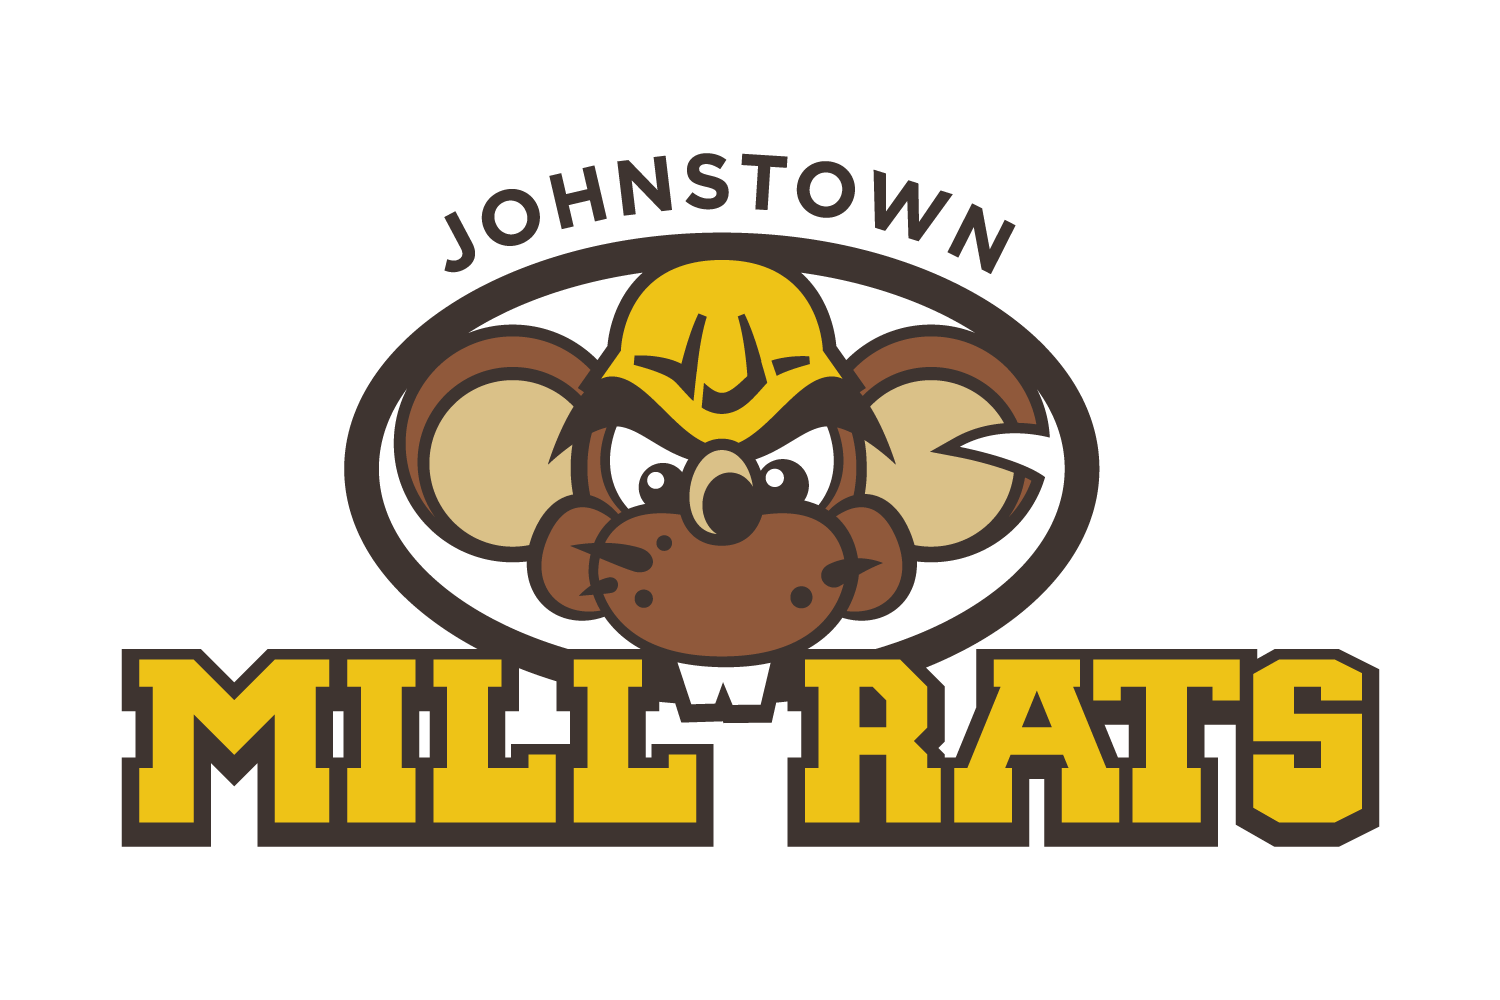 Johnstown Mill Rats Baseball Team Logo